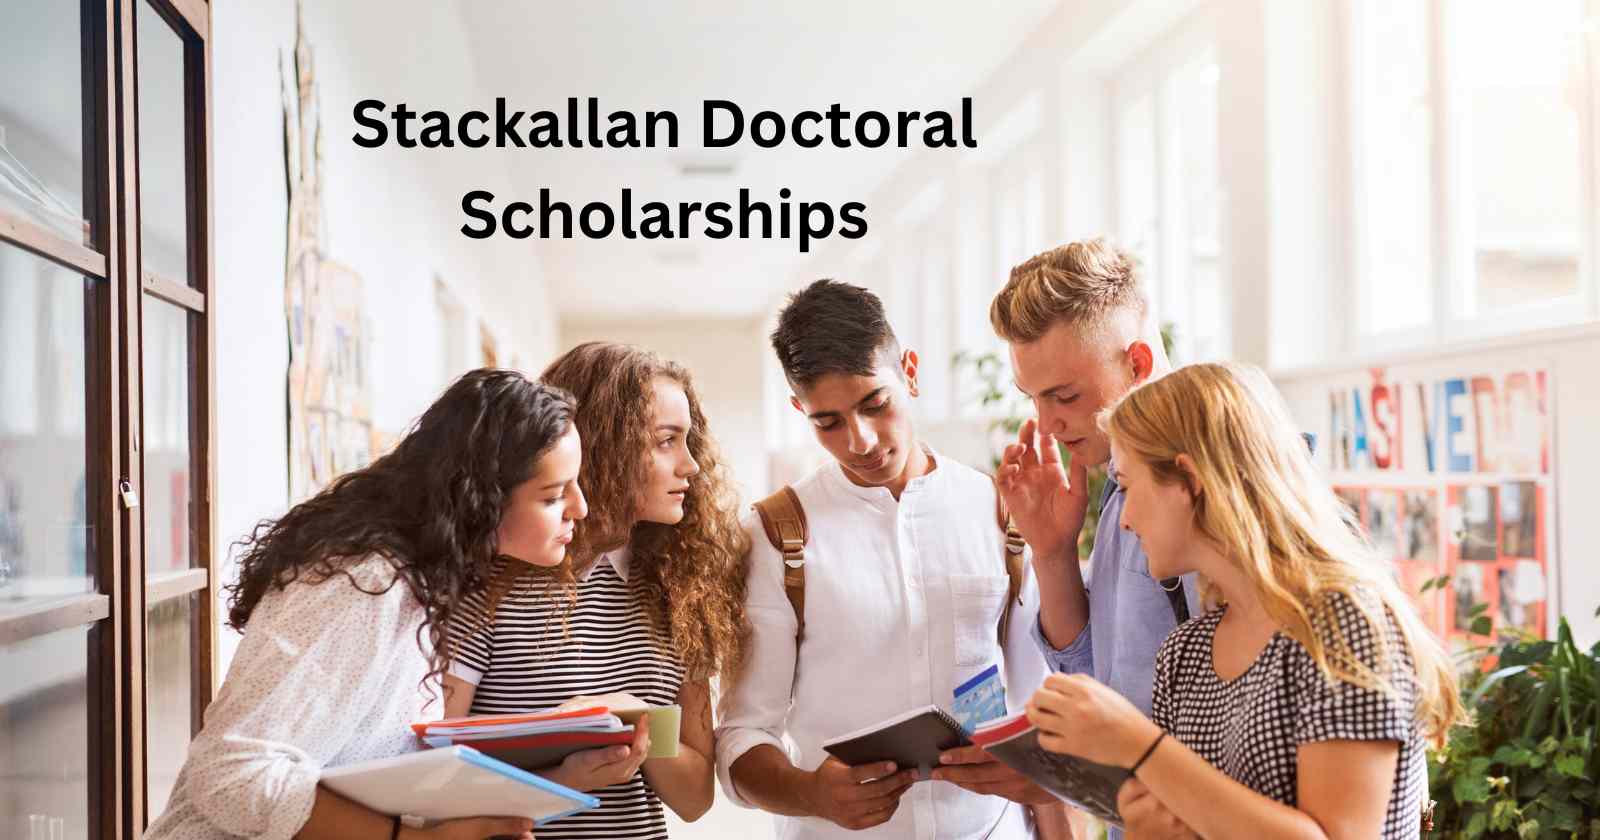 Stackallan Doctoral Scholarships